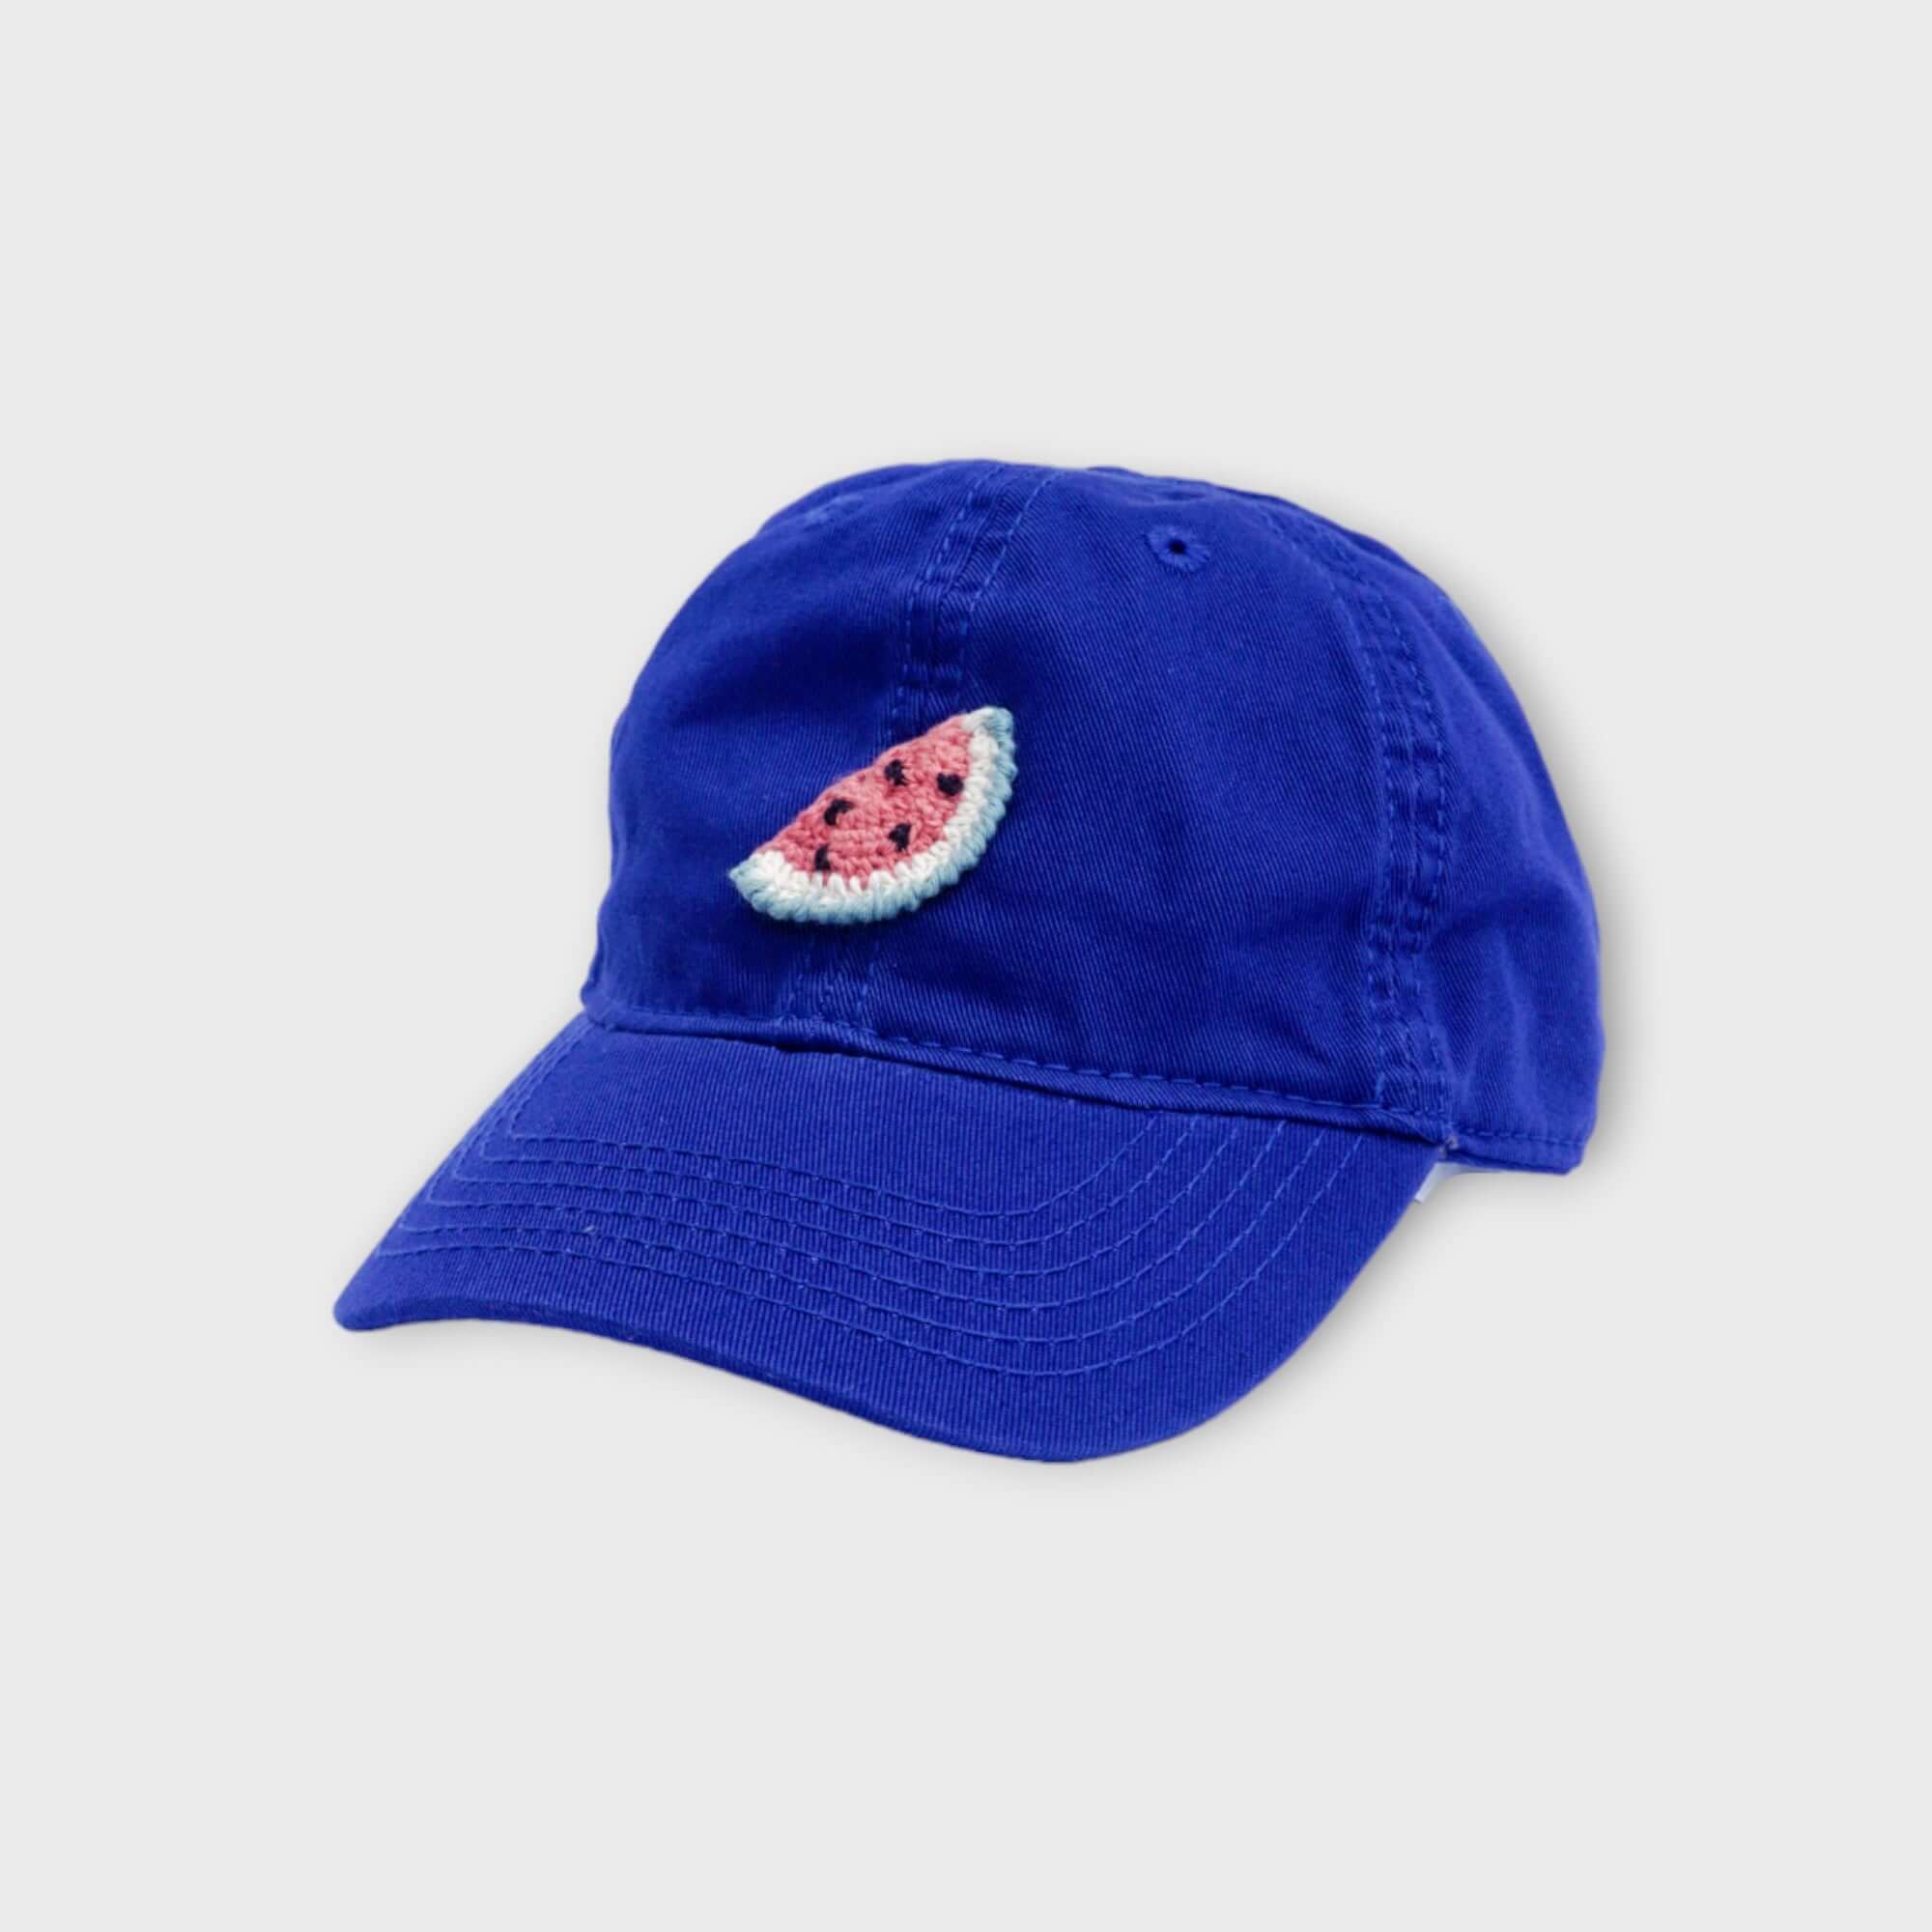 blue baseball cap with watermelon crochet applique